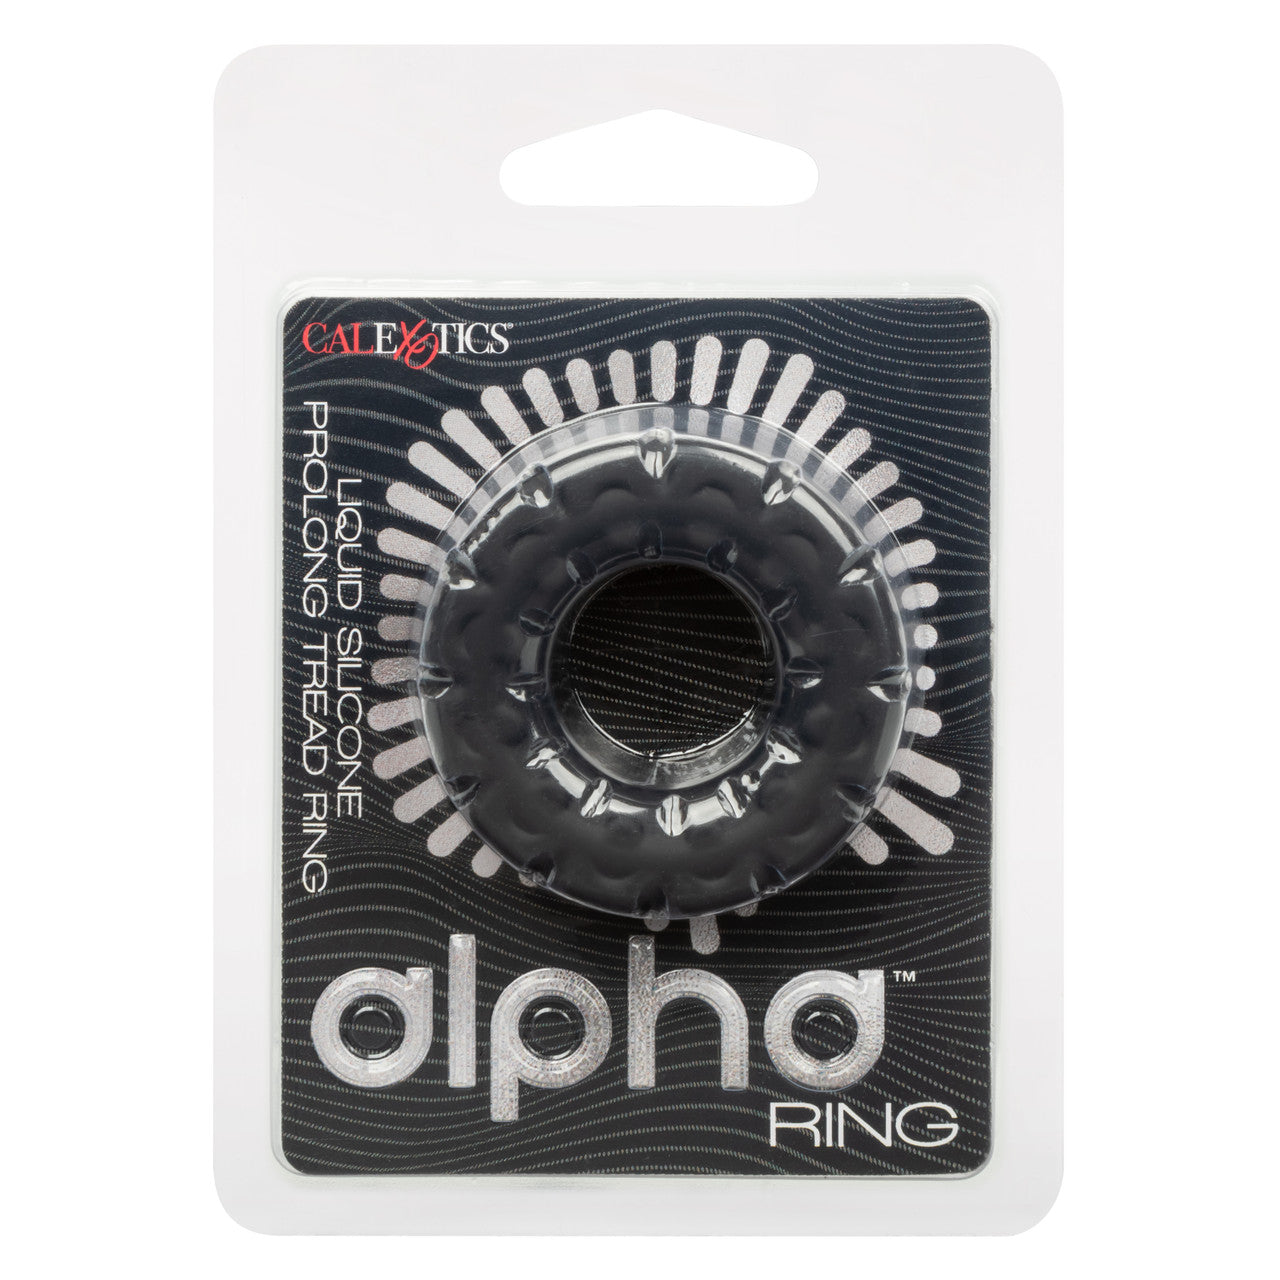 Alpha Liquid Silicone Prolong Tread Ring